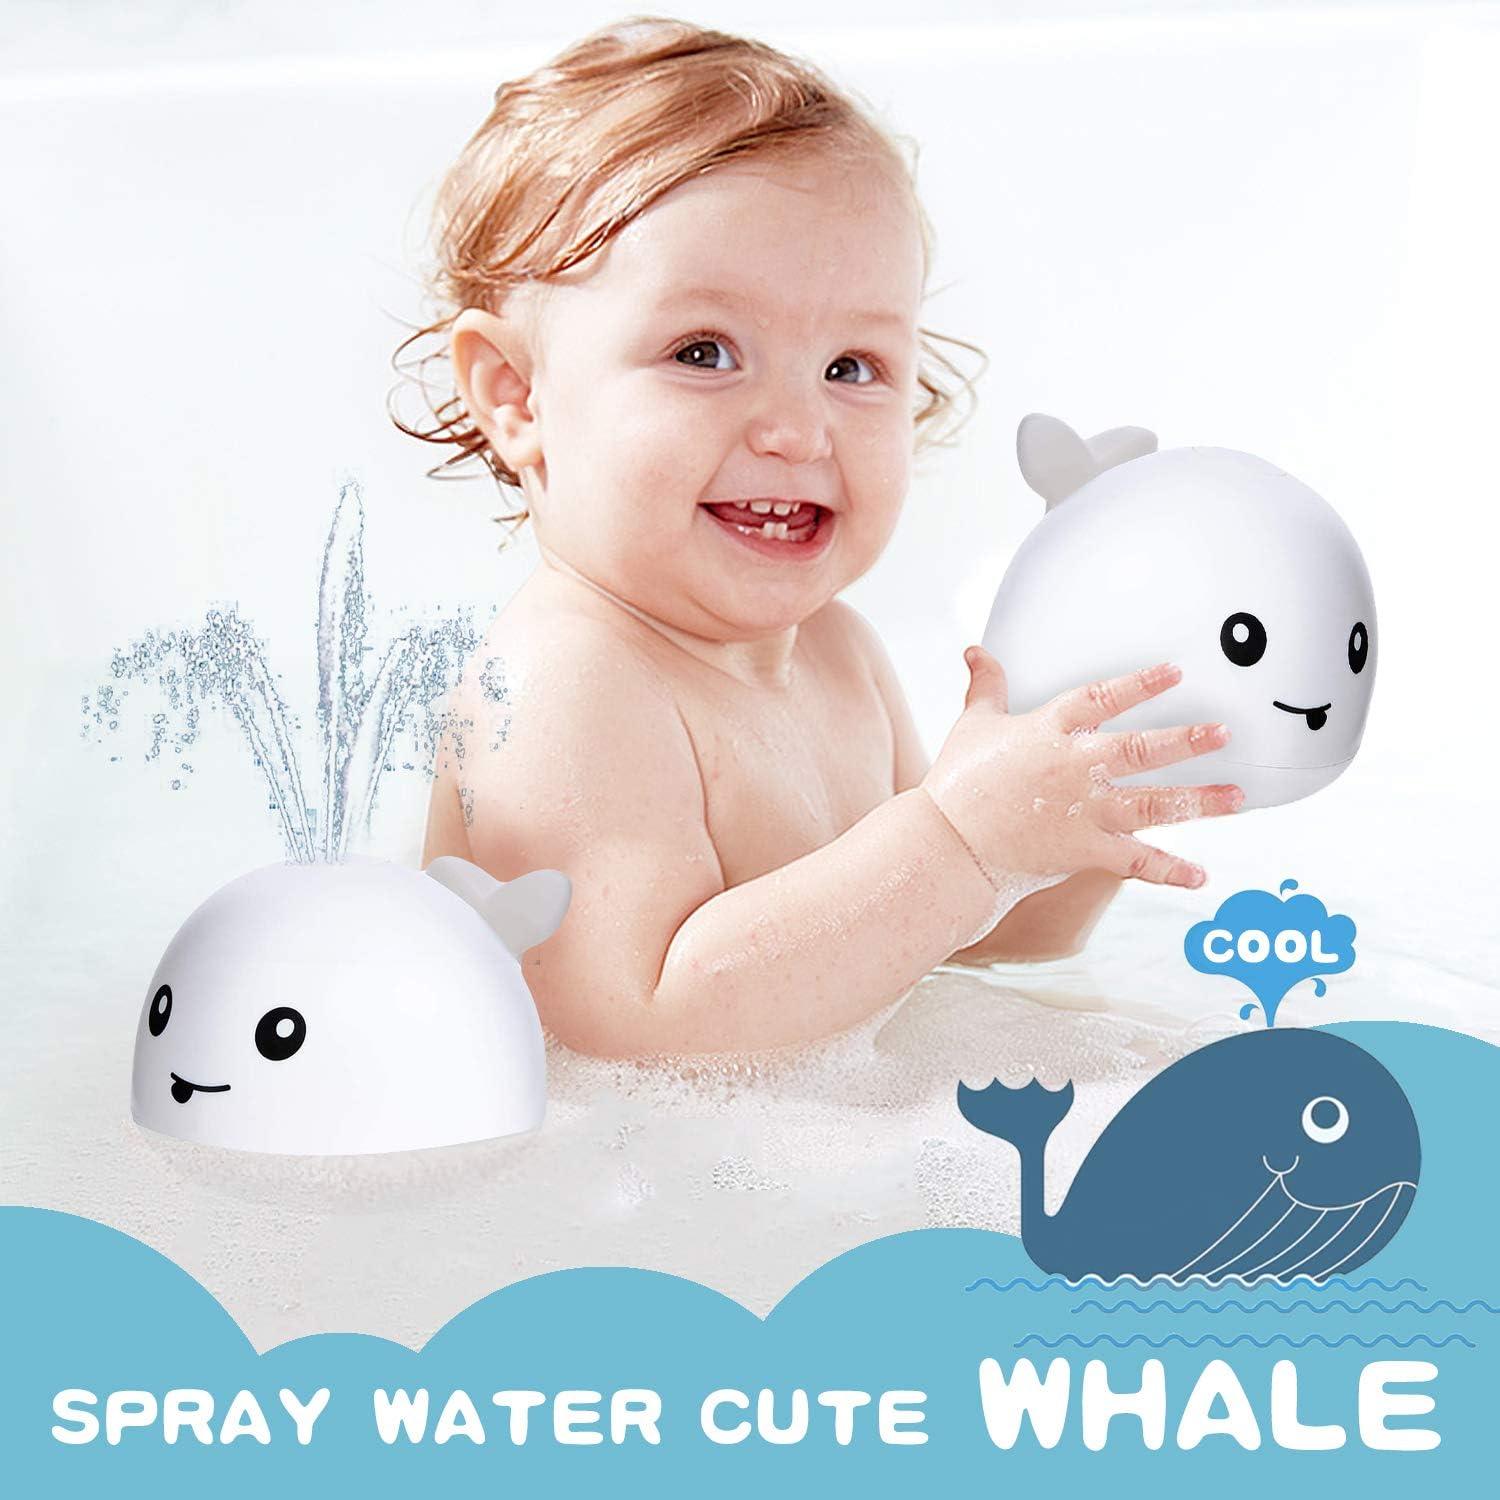 Baby Bath Toys, Light Up Bath Toys, Whale Bath Toy - Decotree.co Online Shop